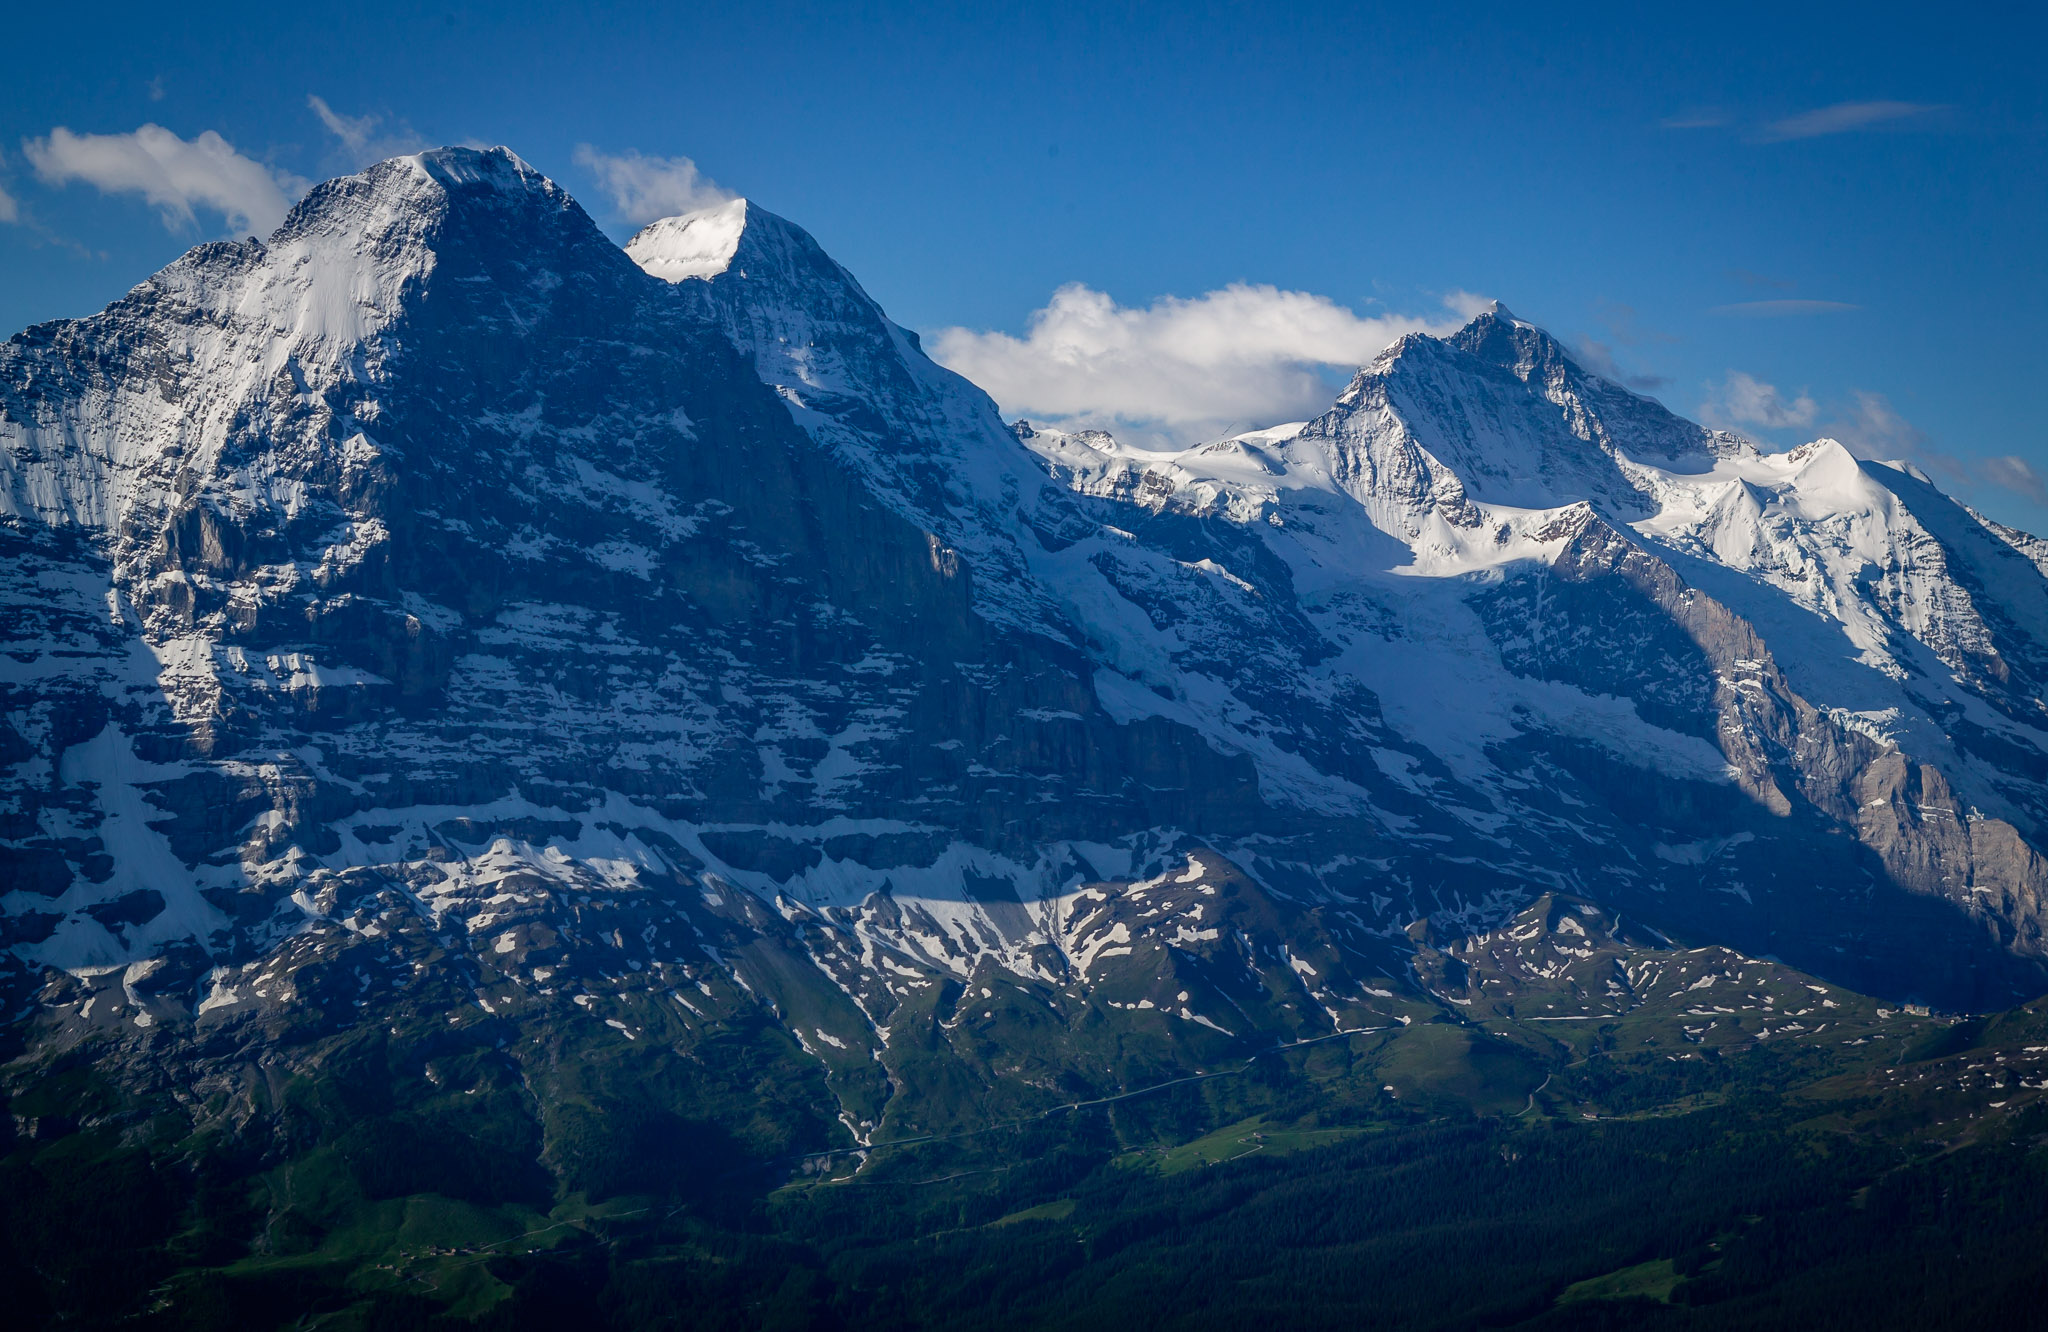 The Eiger, Monk & Jungfrau in morning light